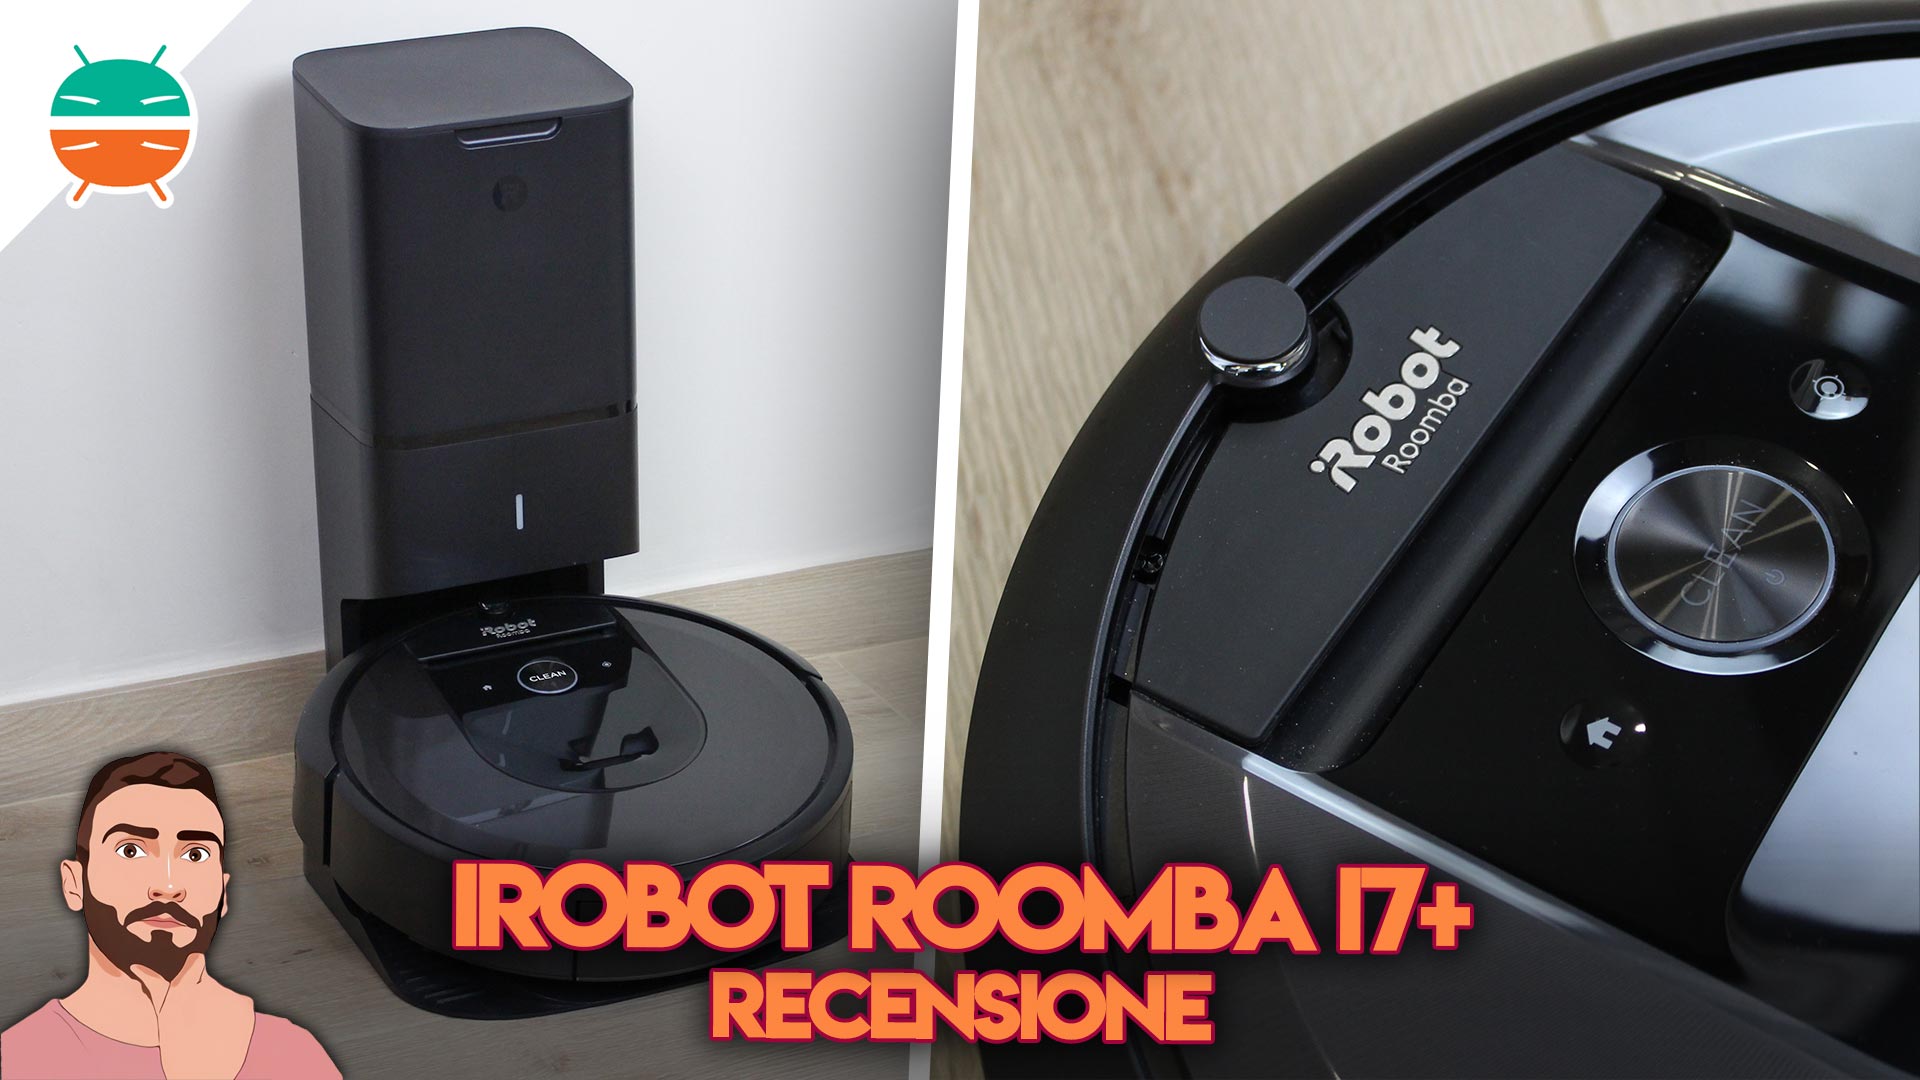 IRobot Roomba i7 + review: it's smart itself! - GizChina.it